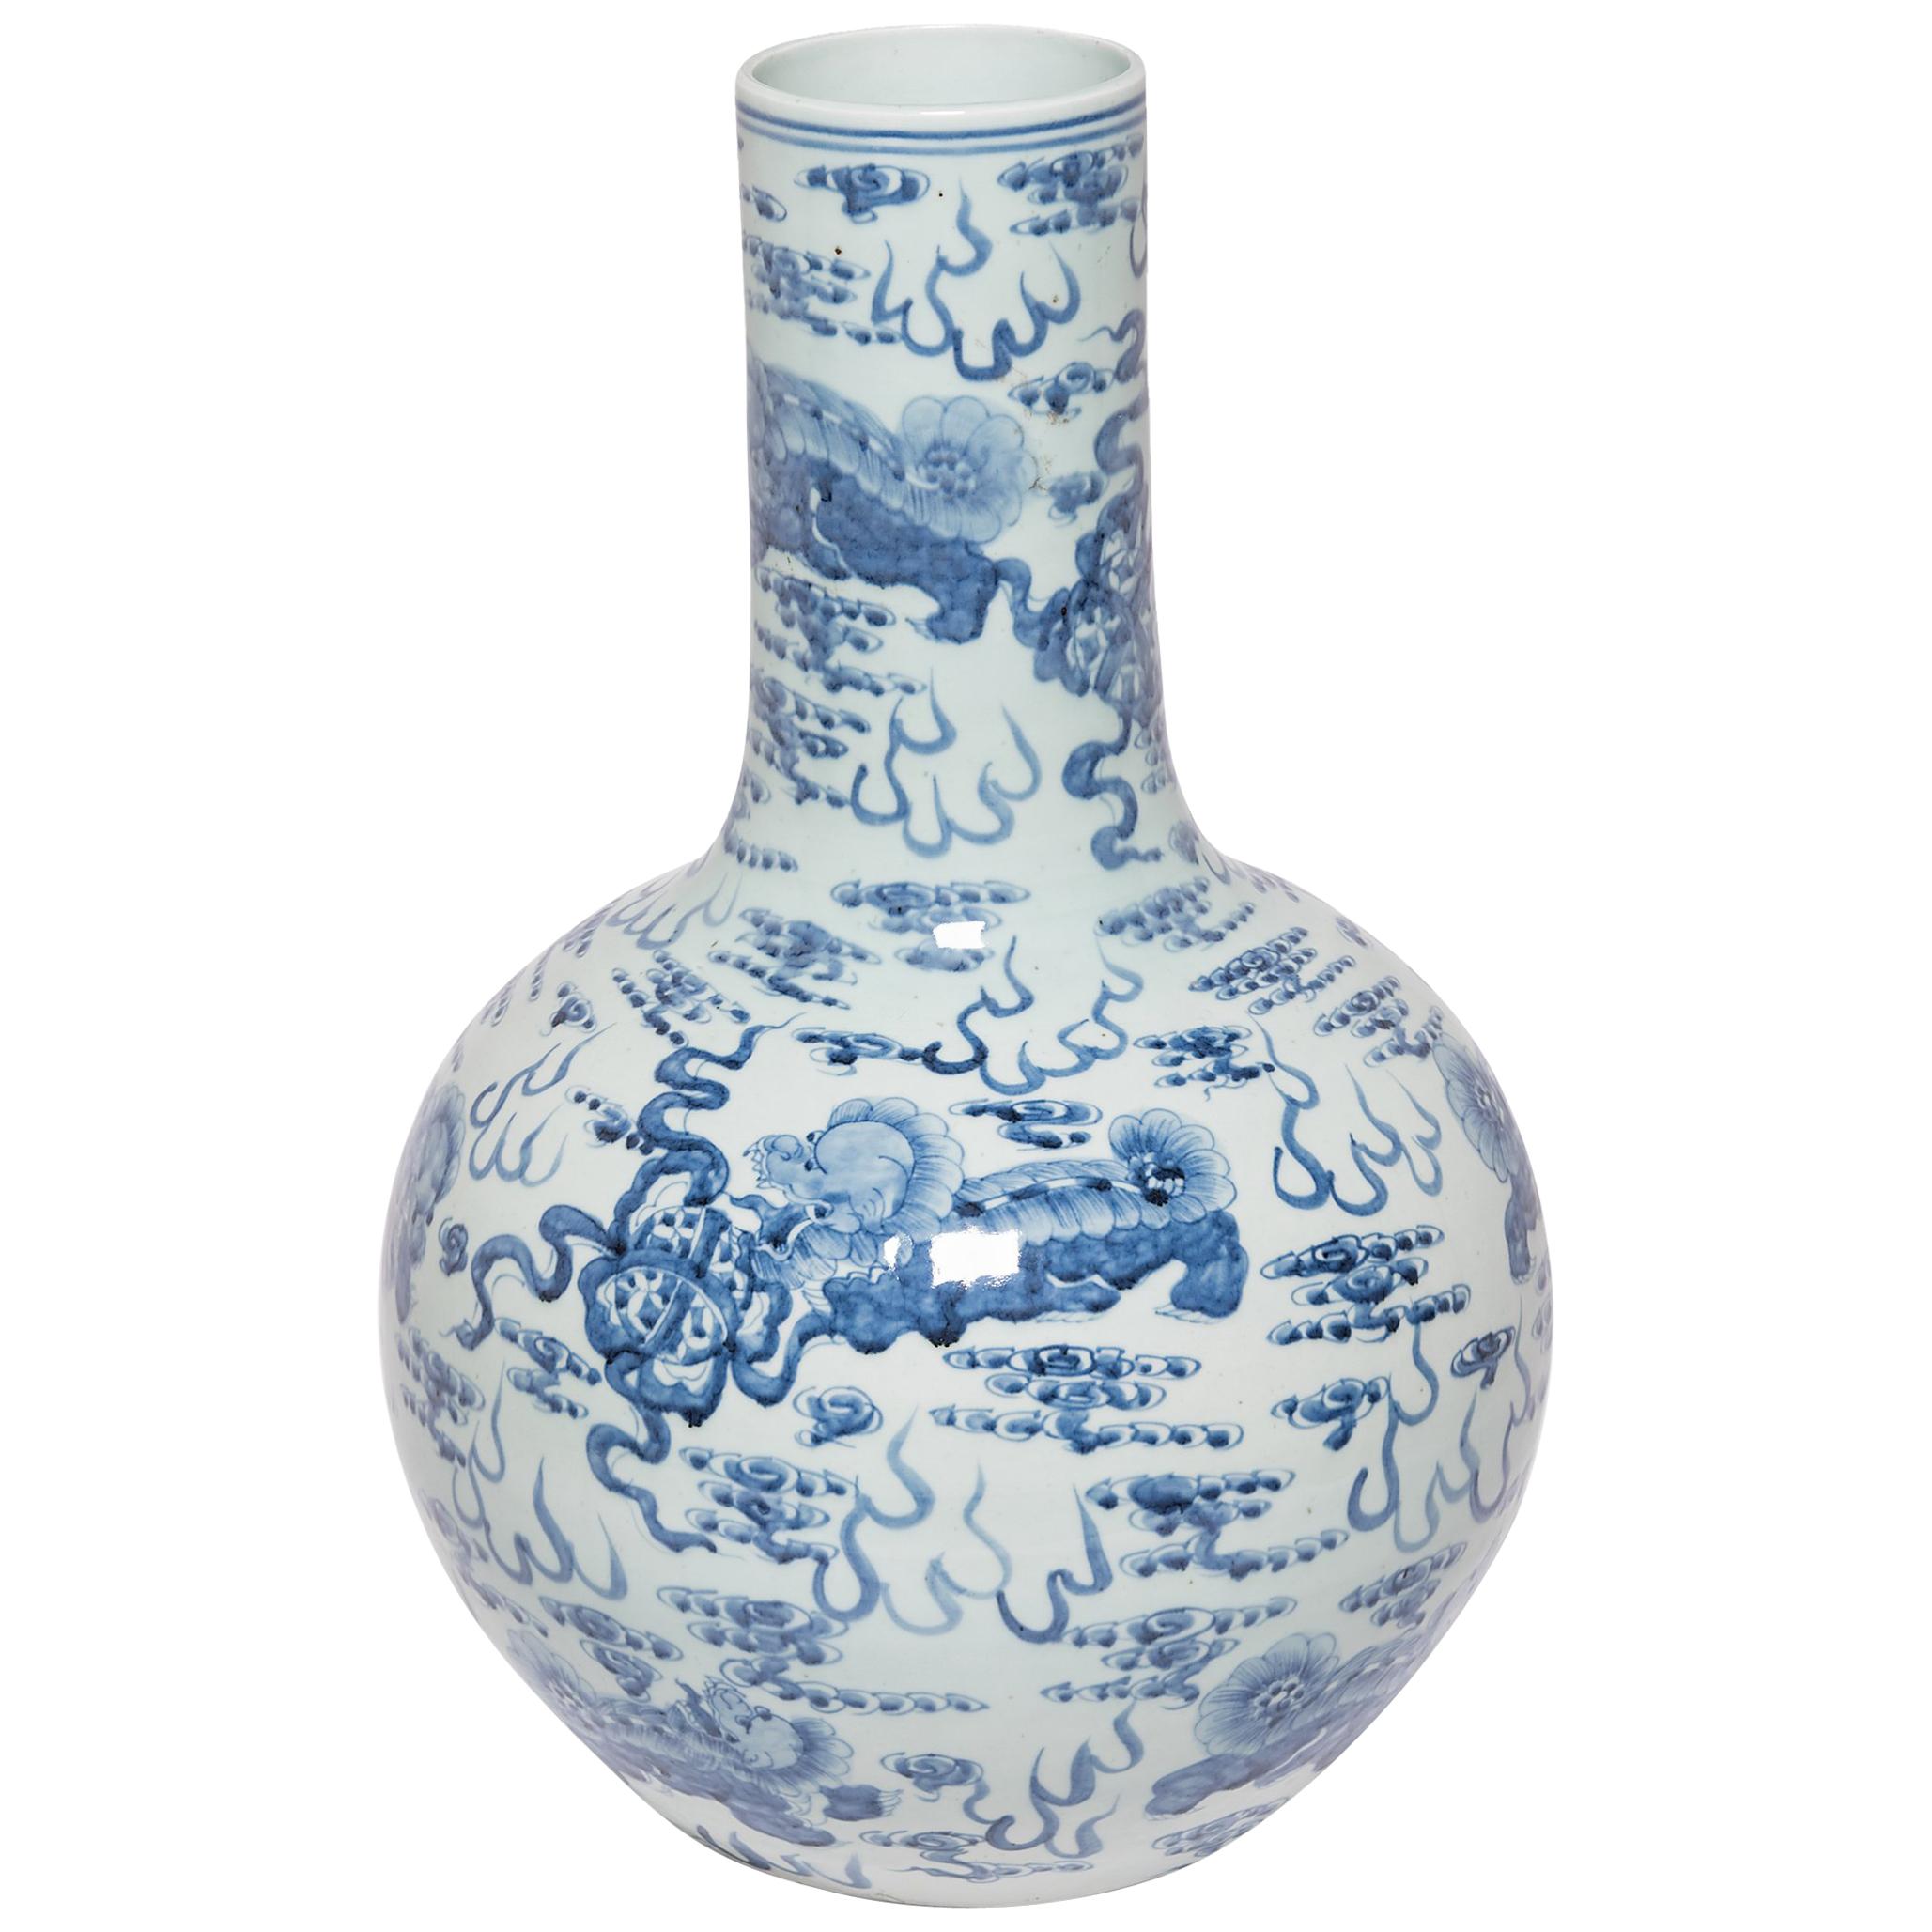 Monumental Blue and White Gooseneck Vase with Fu Dogs